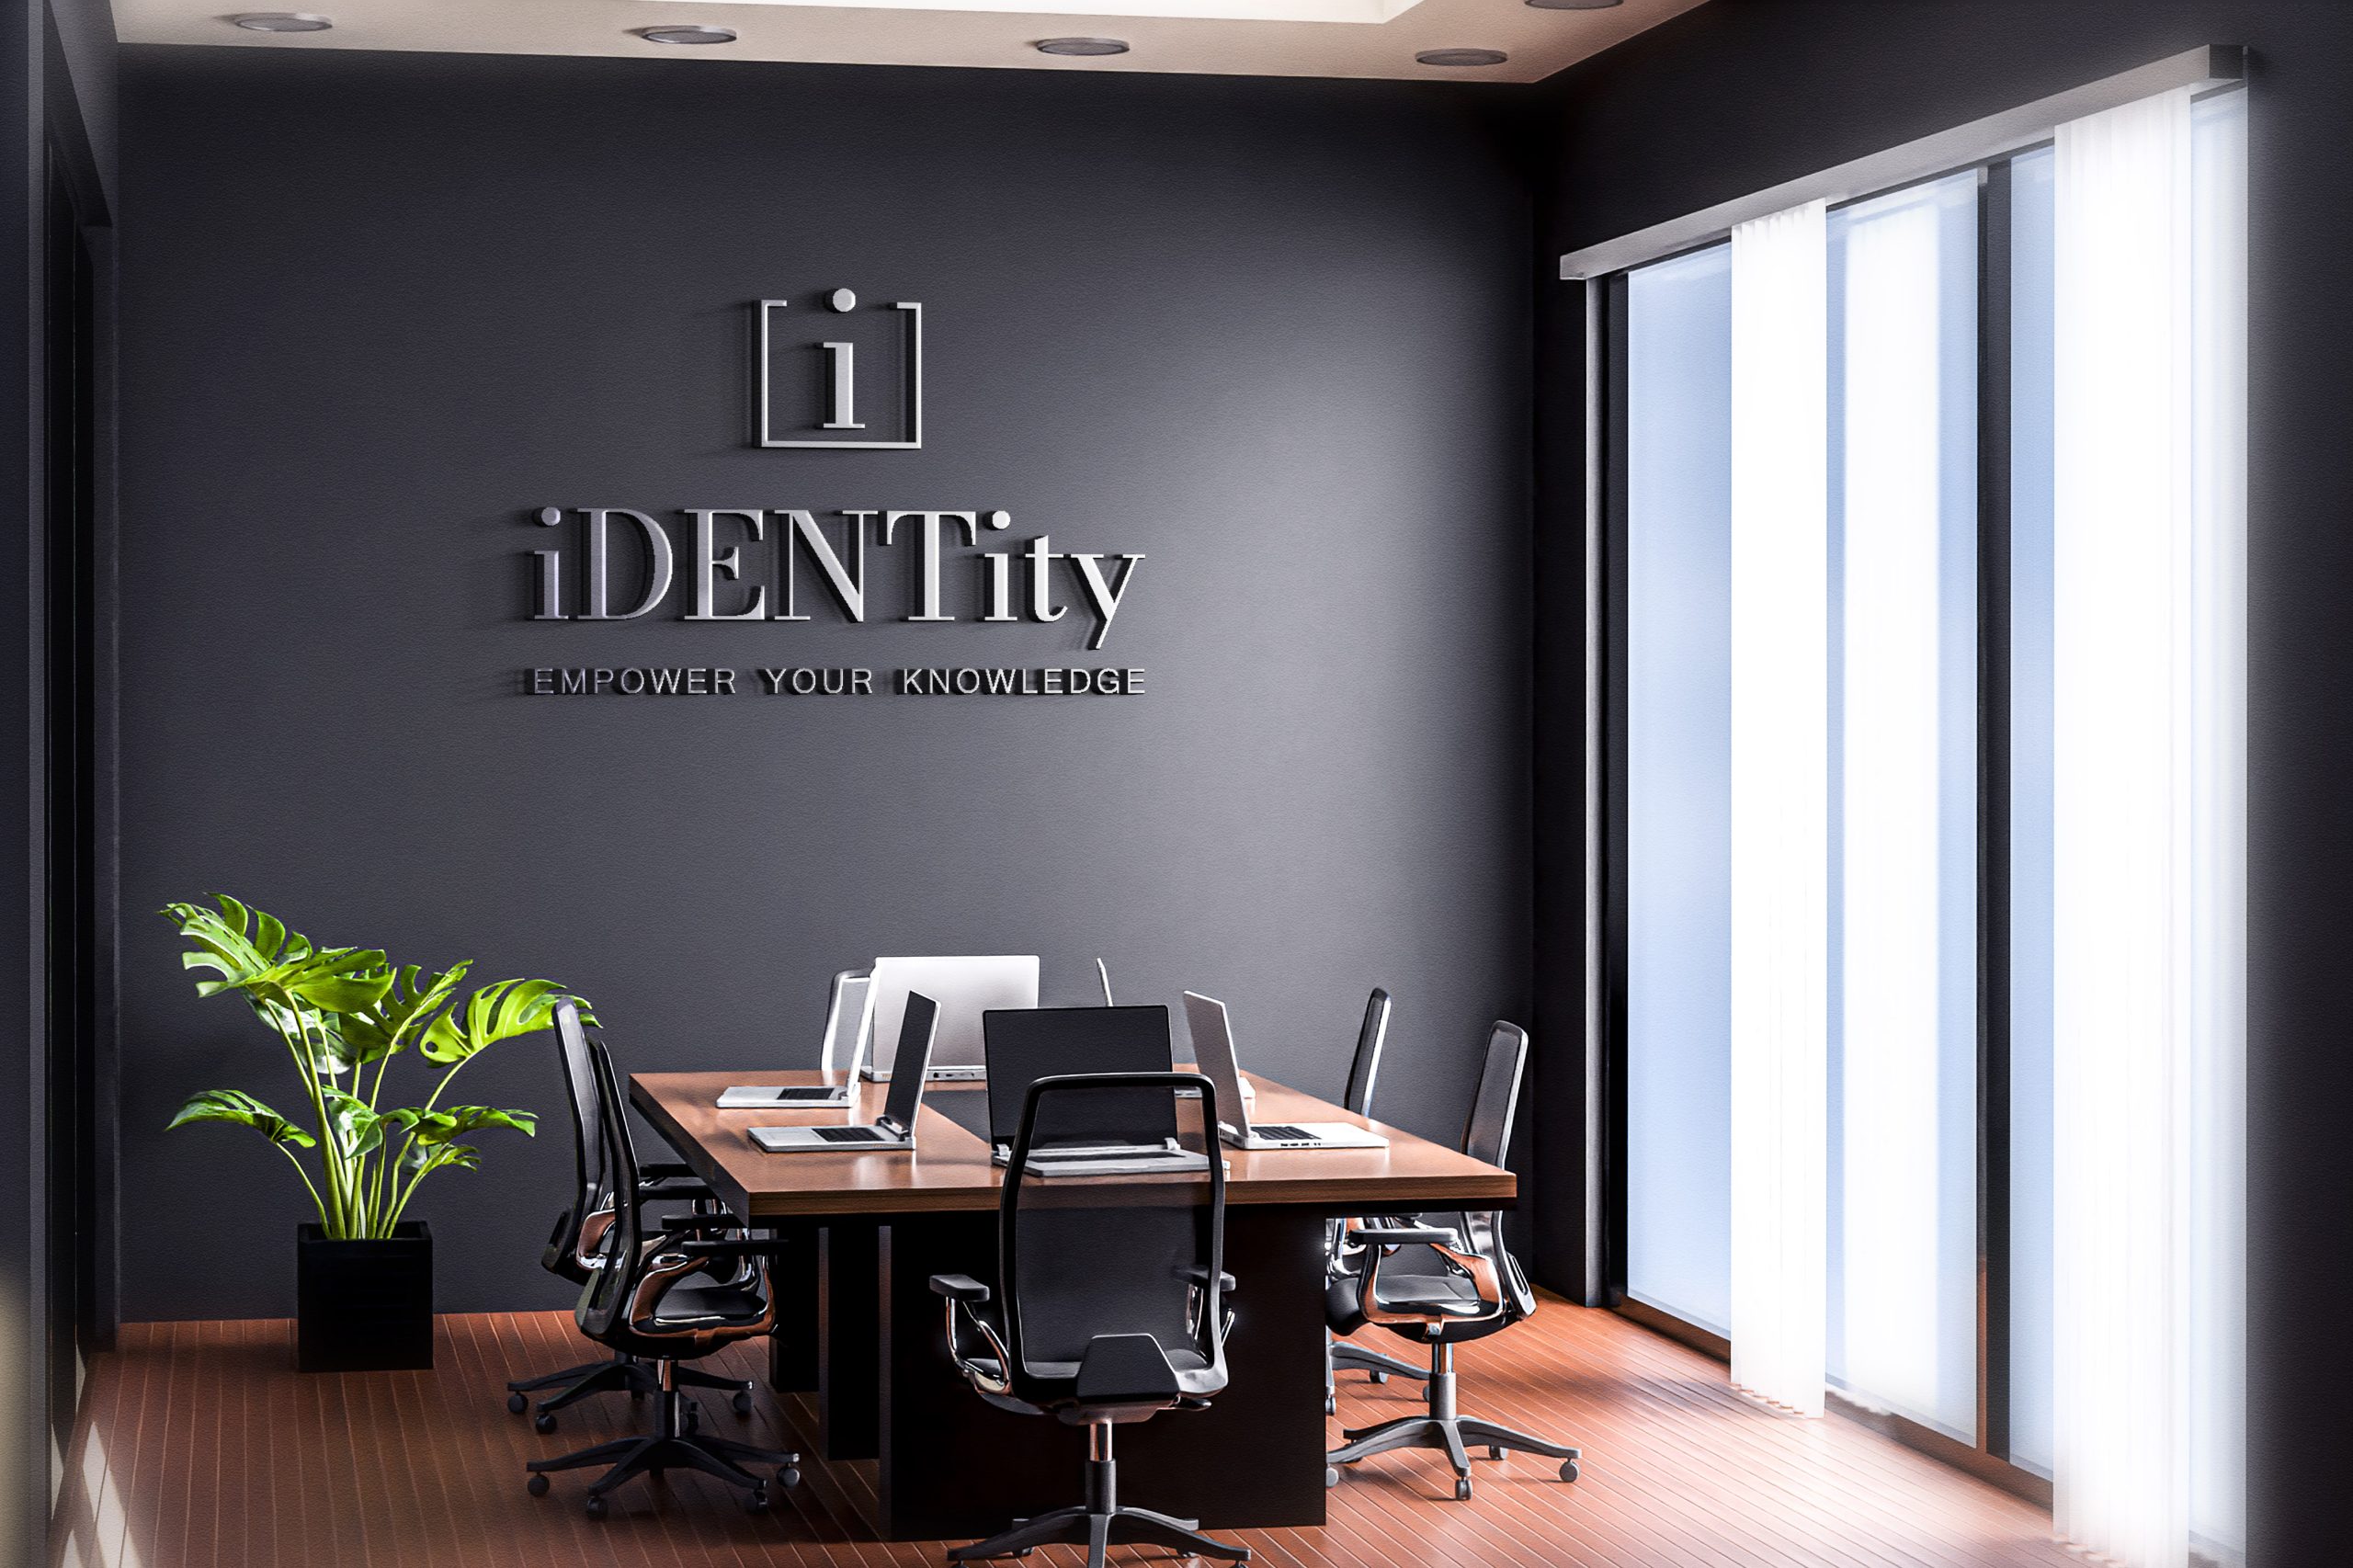 Prikaz iDENTity logotipa u uredu